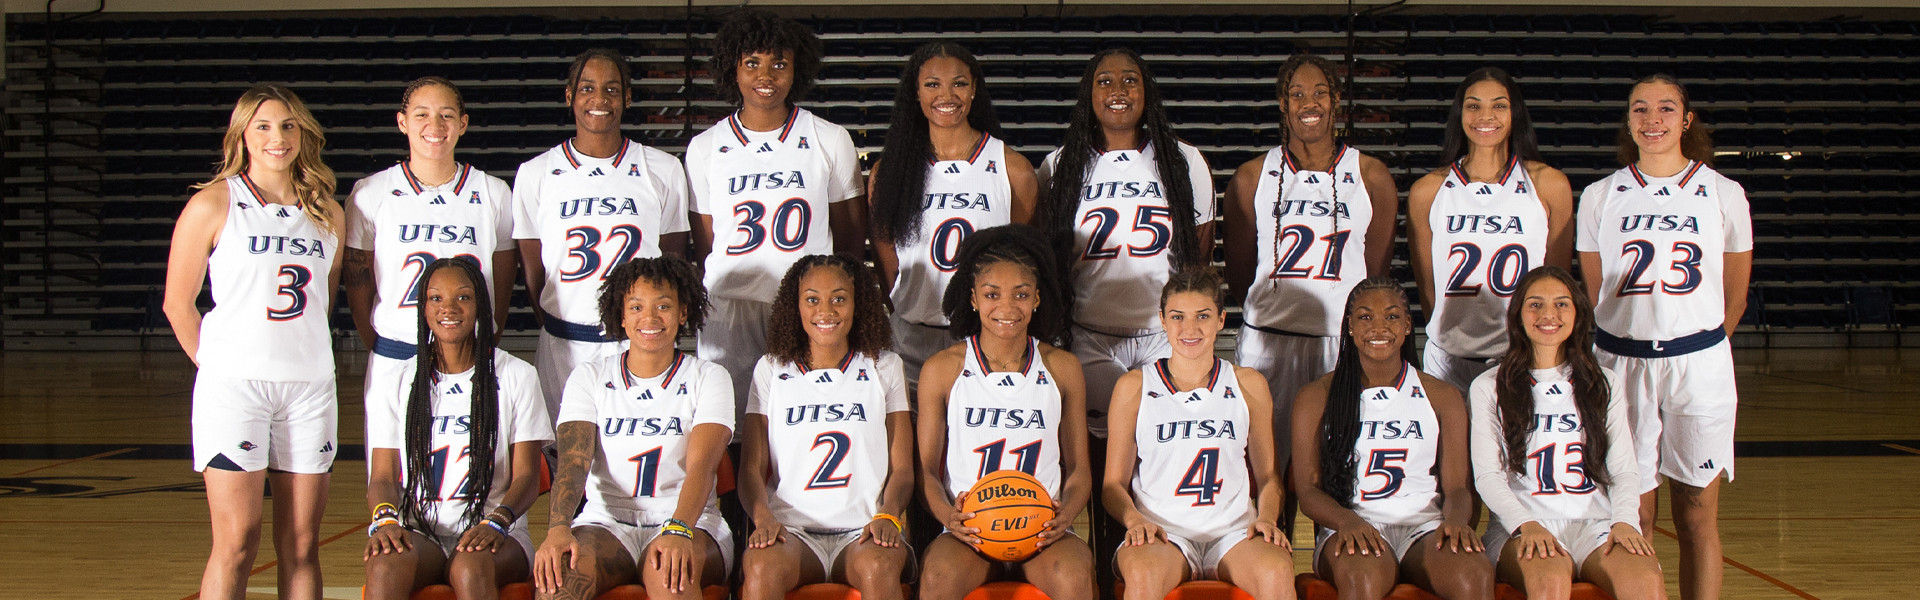 UTSA Women's Basketball Tickets - UTSA Athletics - Official